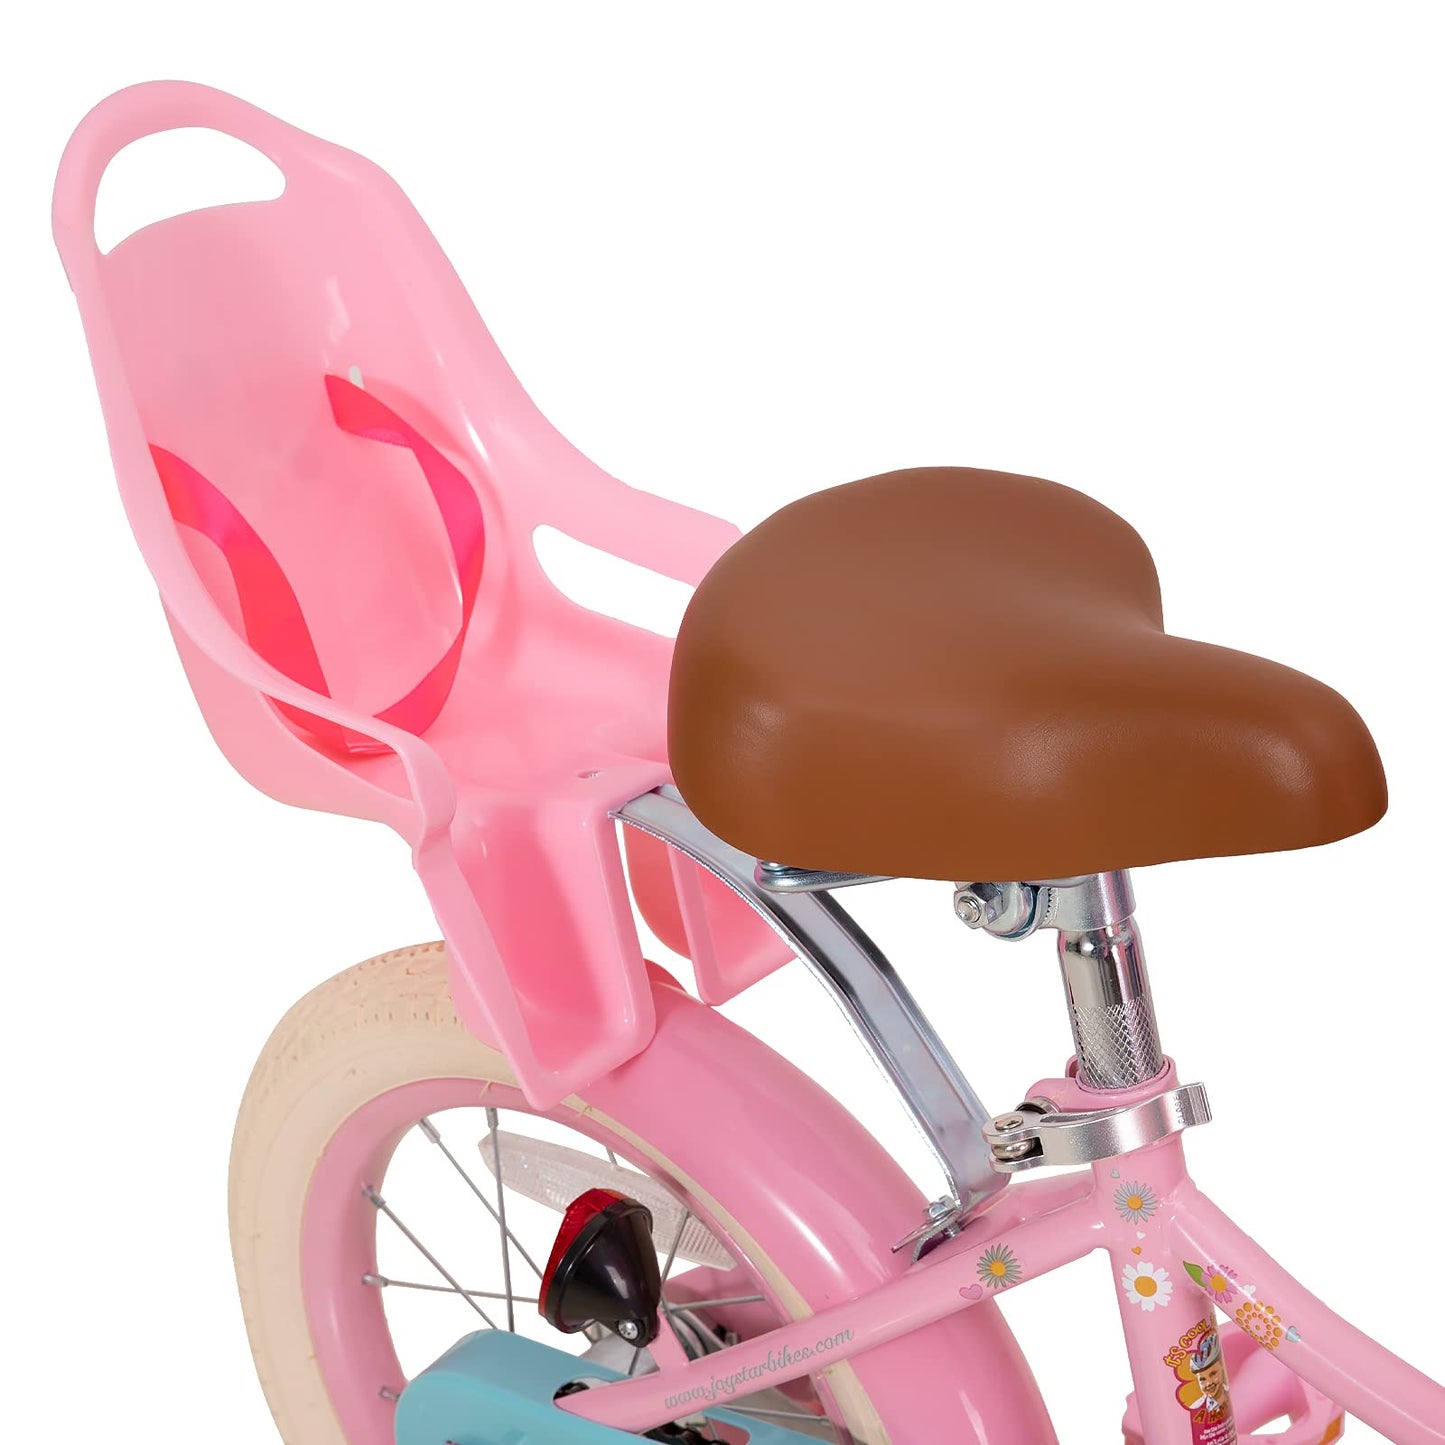 JOYSTAR Kids Bike Little Daisy 12 Inch Girls Bike with Training Wheels Doll Bike Seat Basket & Streamers Princess Kids Bicycle for Girls Toddler of 2-4 Years Toddler Girl Bikes Pink